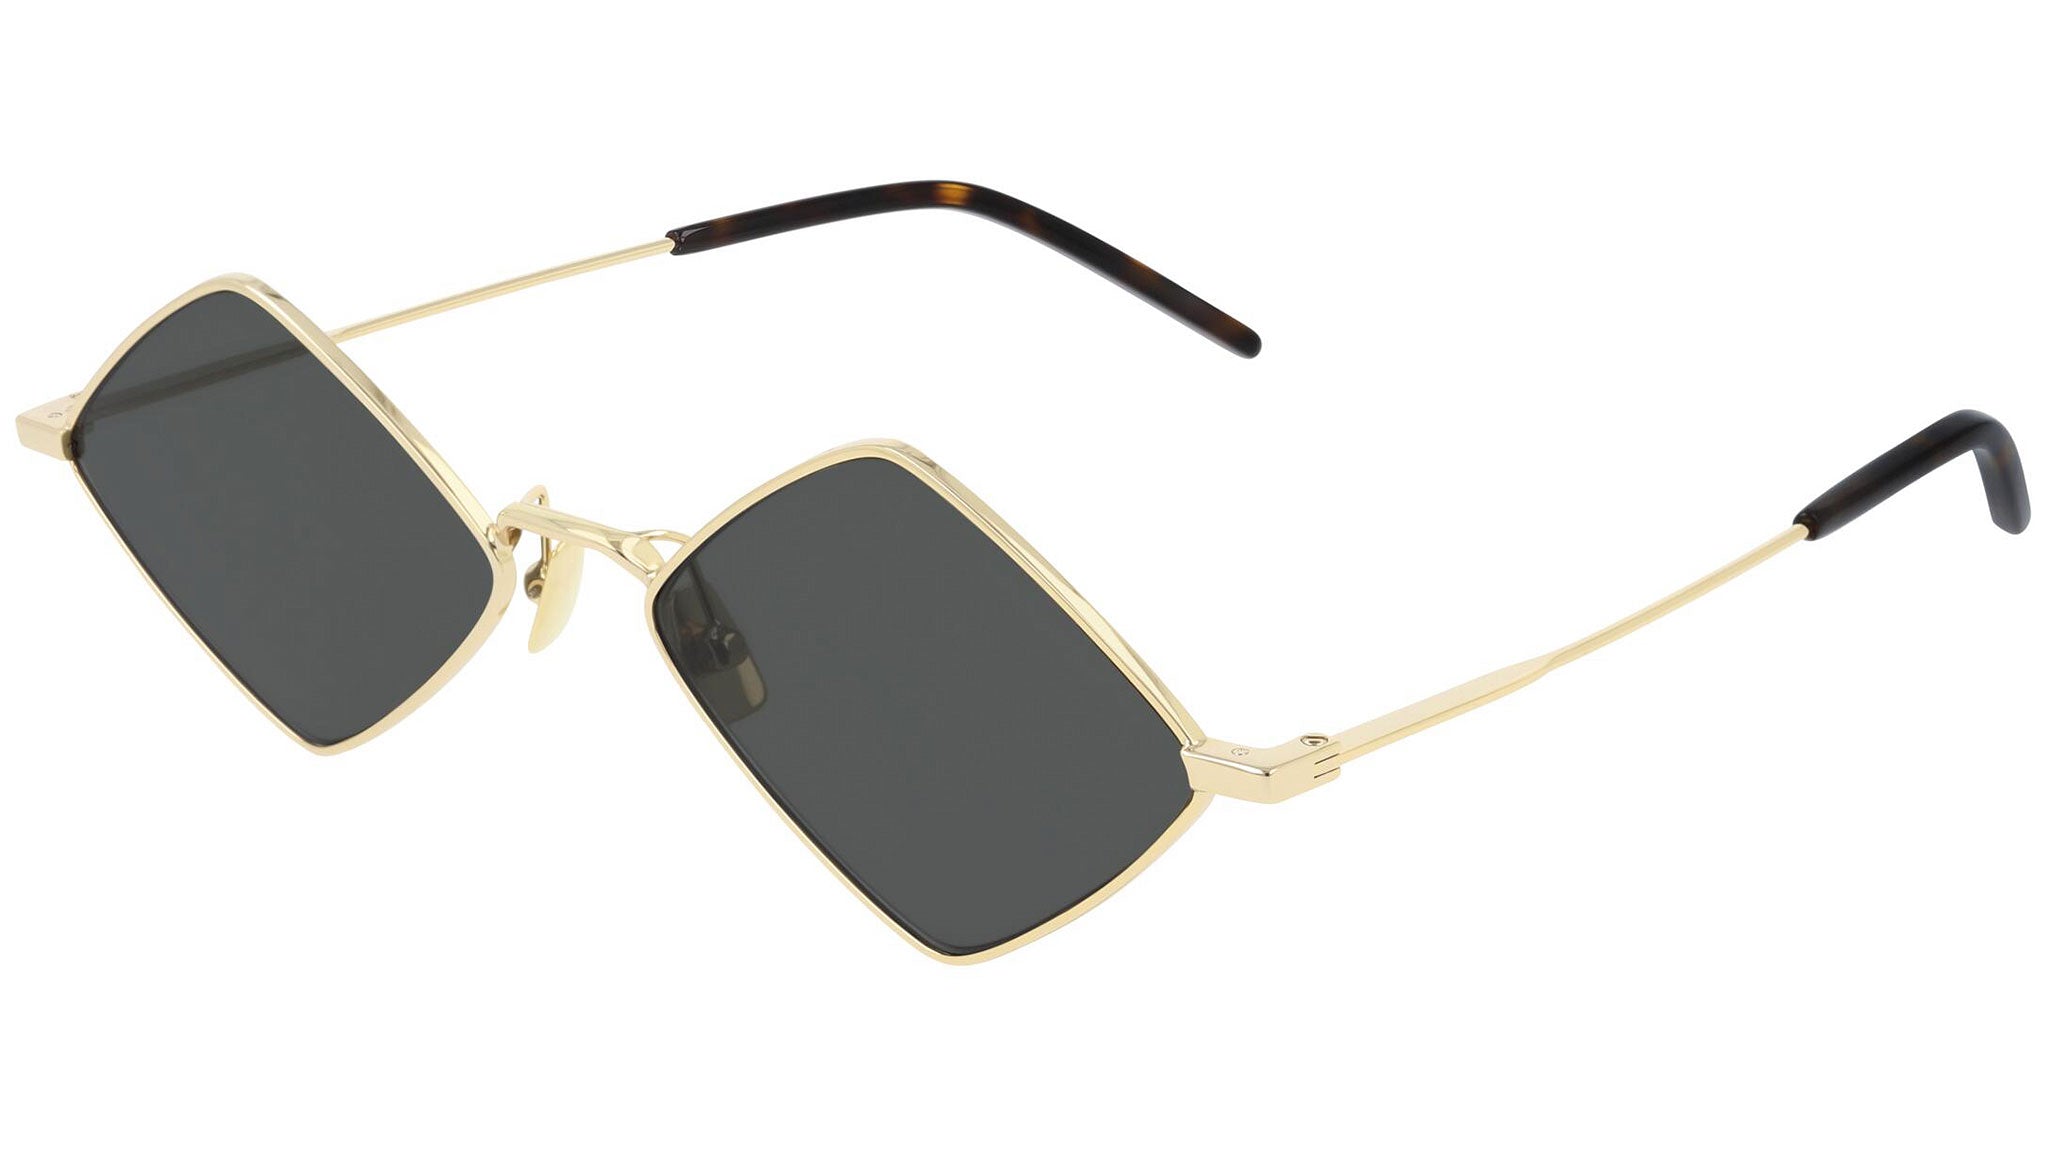 Yves Saint Laurent SL 302 002 55 17 Sunglasses